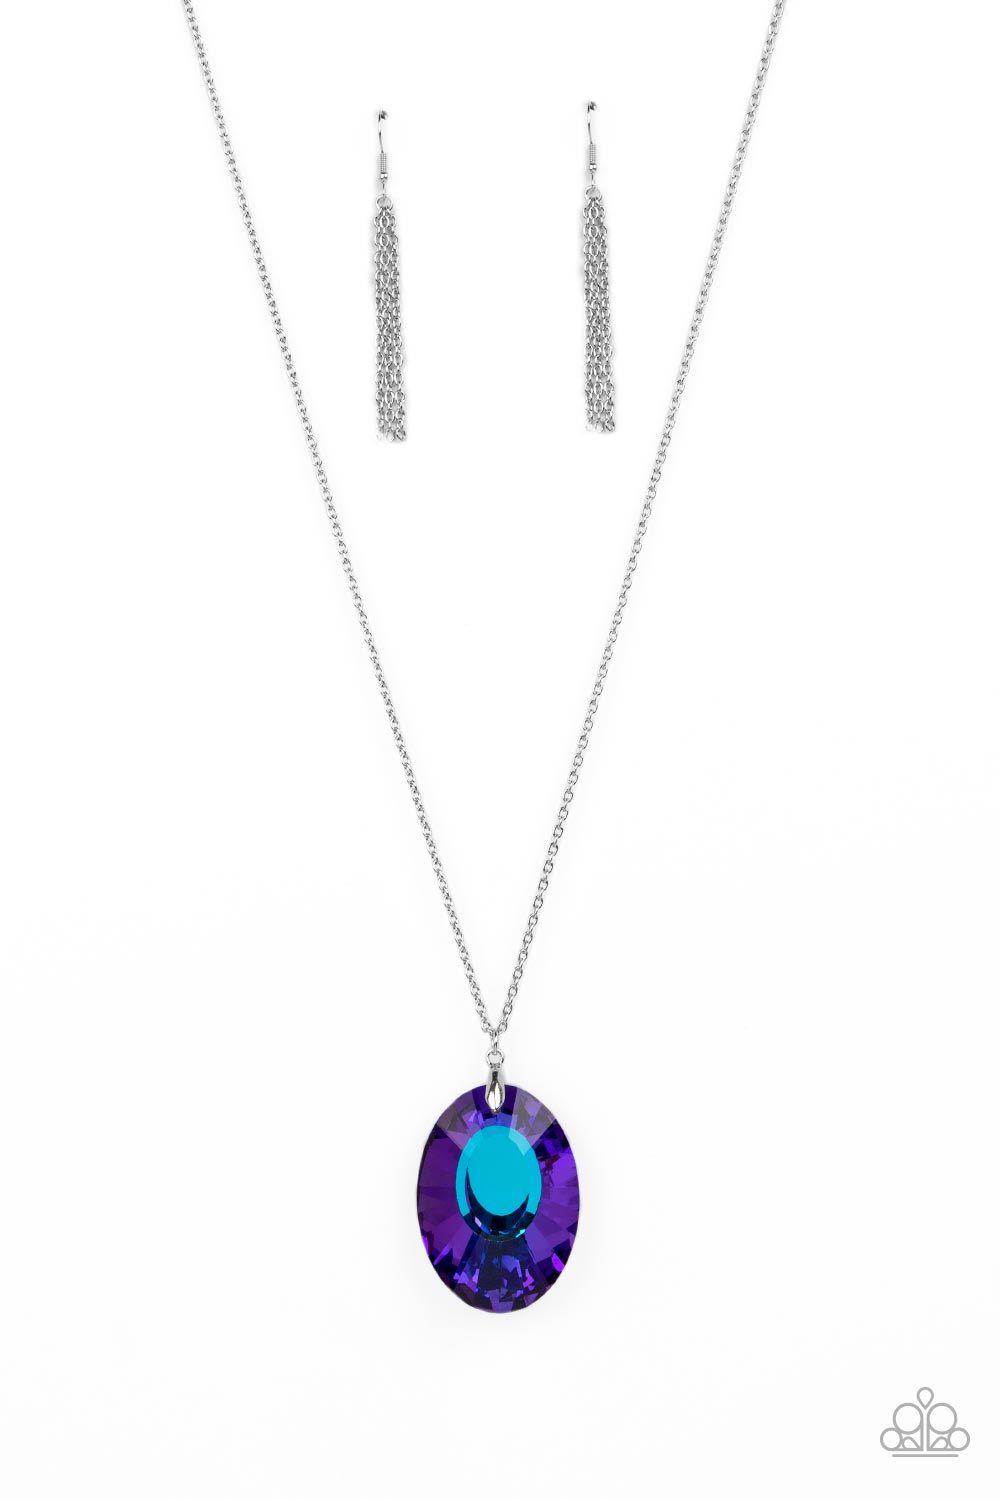 Celestial Essence Blue Iridescent Rhinestone Necklace - Paparazzi Accessories- lightbox - CarasShop.com - $5 Jewelry by Cara Jewels